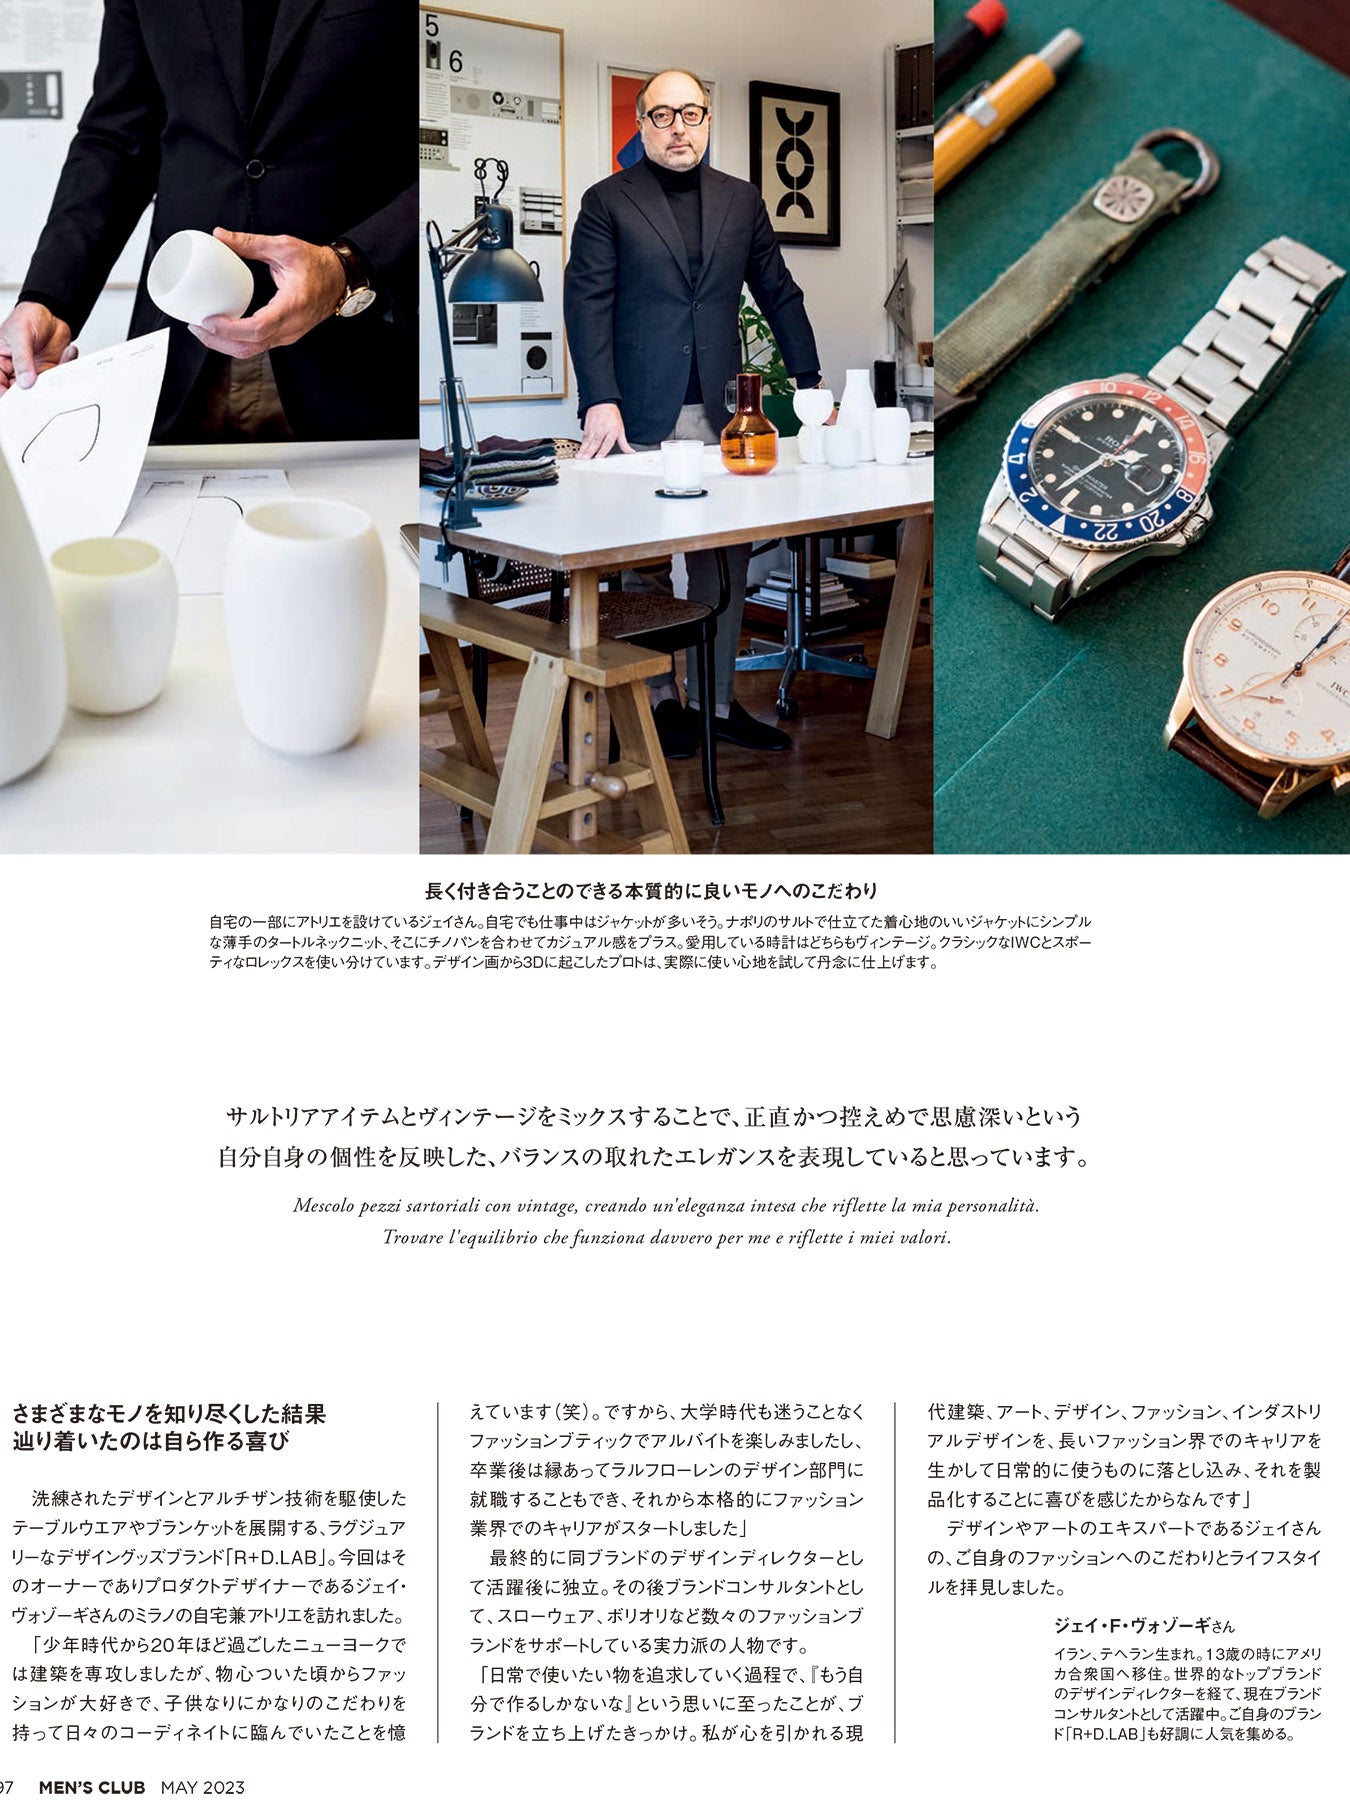 Men's Club Magazine Japan - May 2023